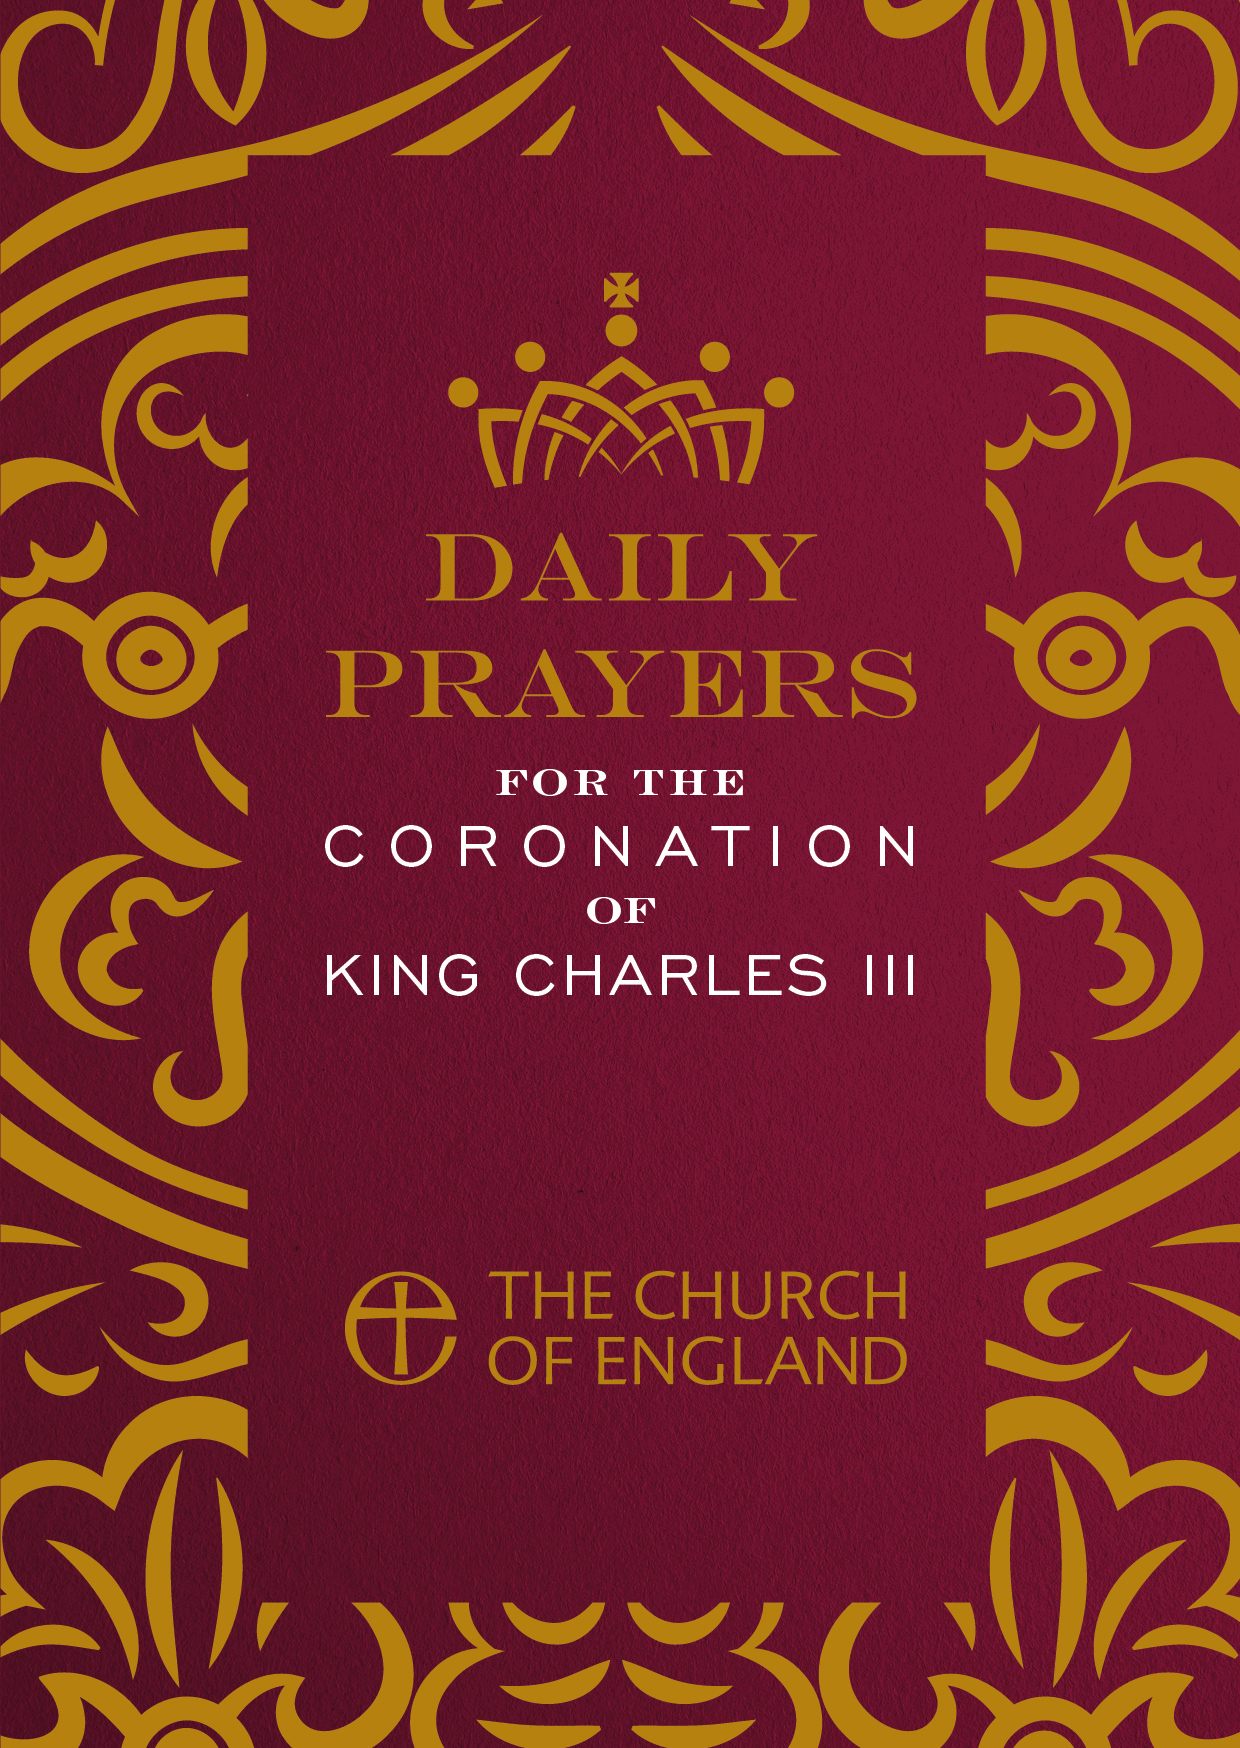 Daily Prayers for the Coronation of King Charles III single copy